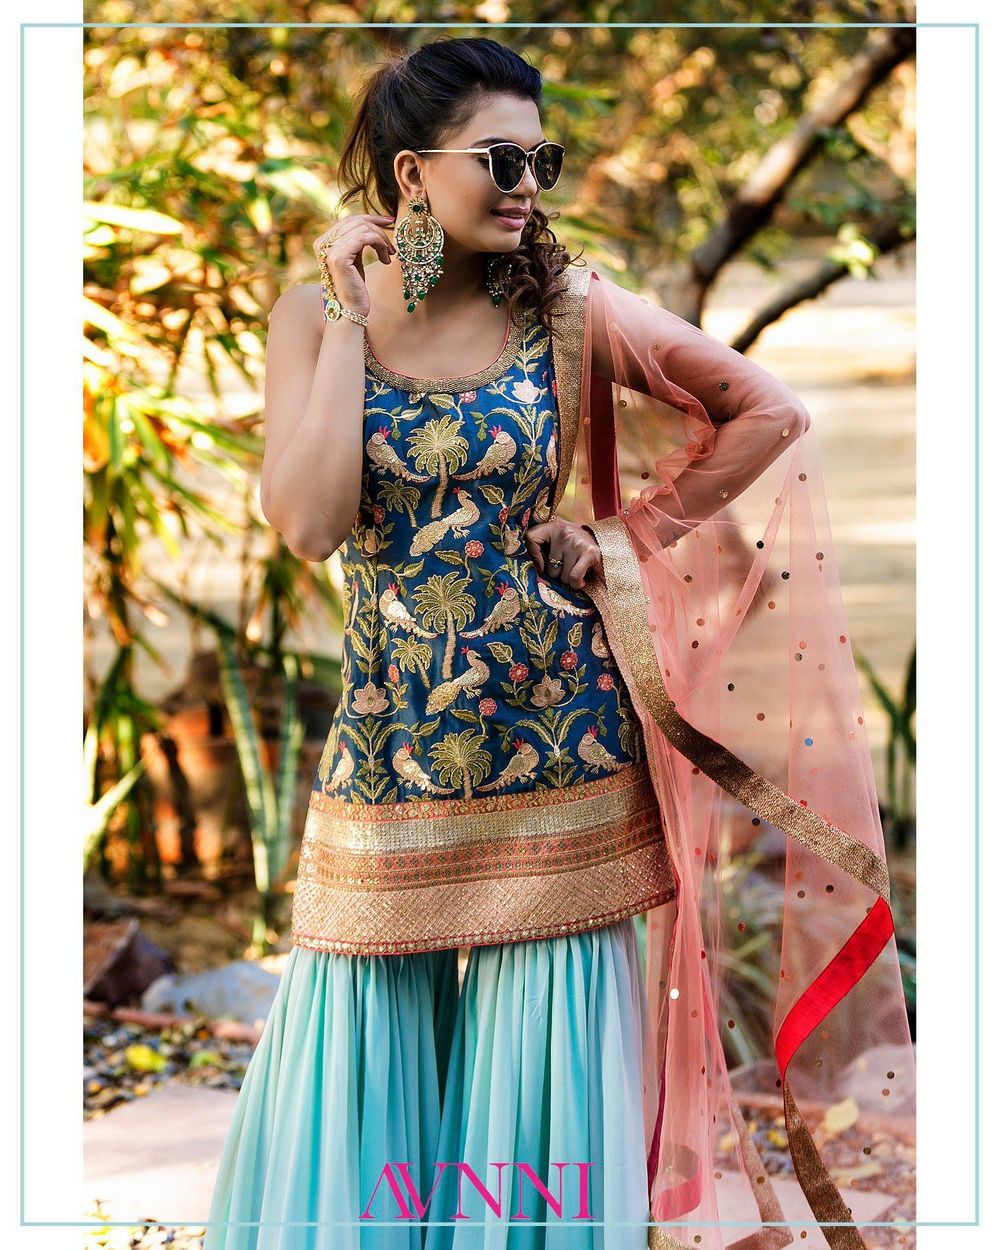 Photo By Avnni Kapur Clothing Line - Bridal Wear